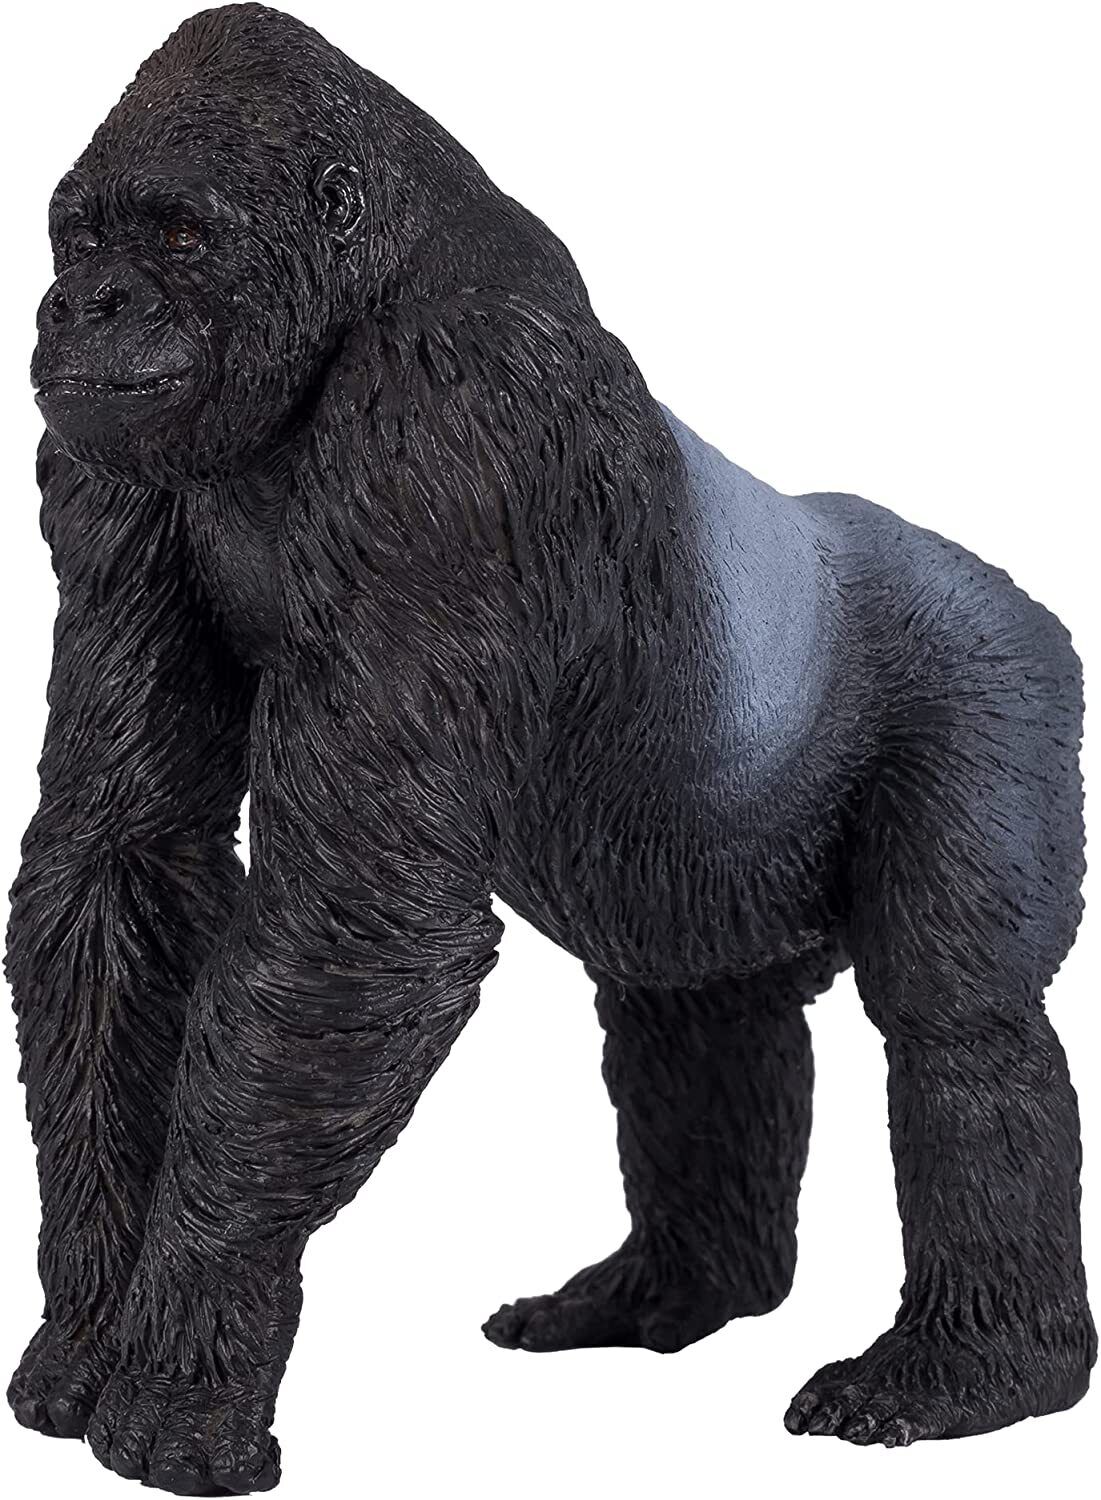 MOJO Gorilla Male Silverback Wildlife Animal Model Toy Figure